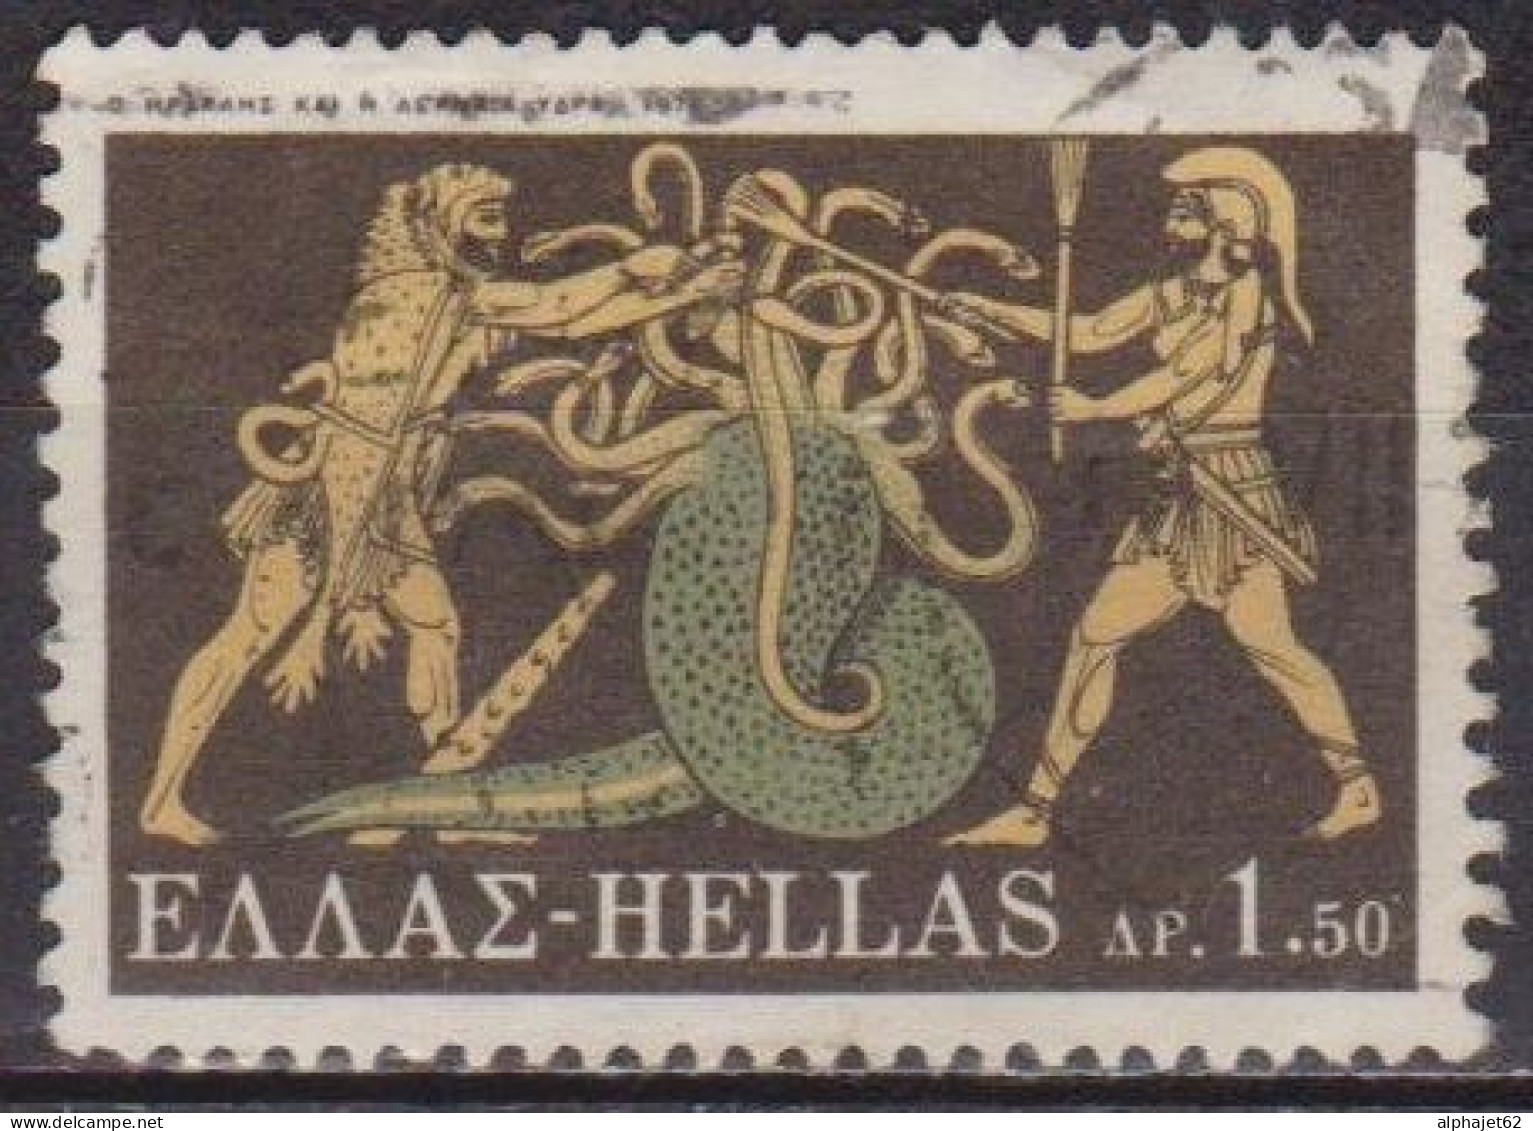 Mythologie - 12 Travaux D'Hercule - GRECE - Hydre De Lerne - N° 1010 - 1970 - Gebruikt